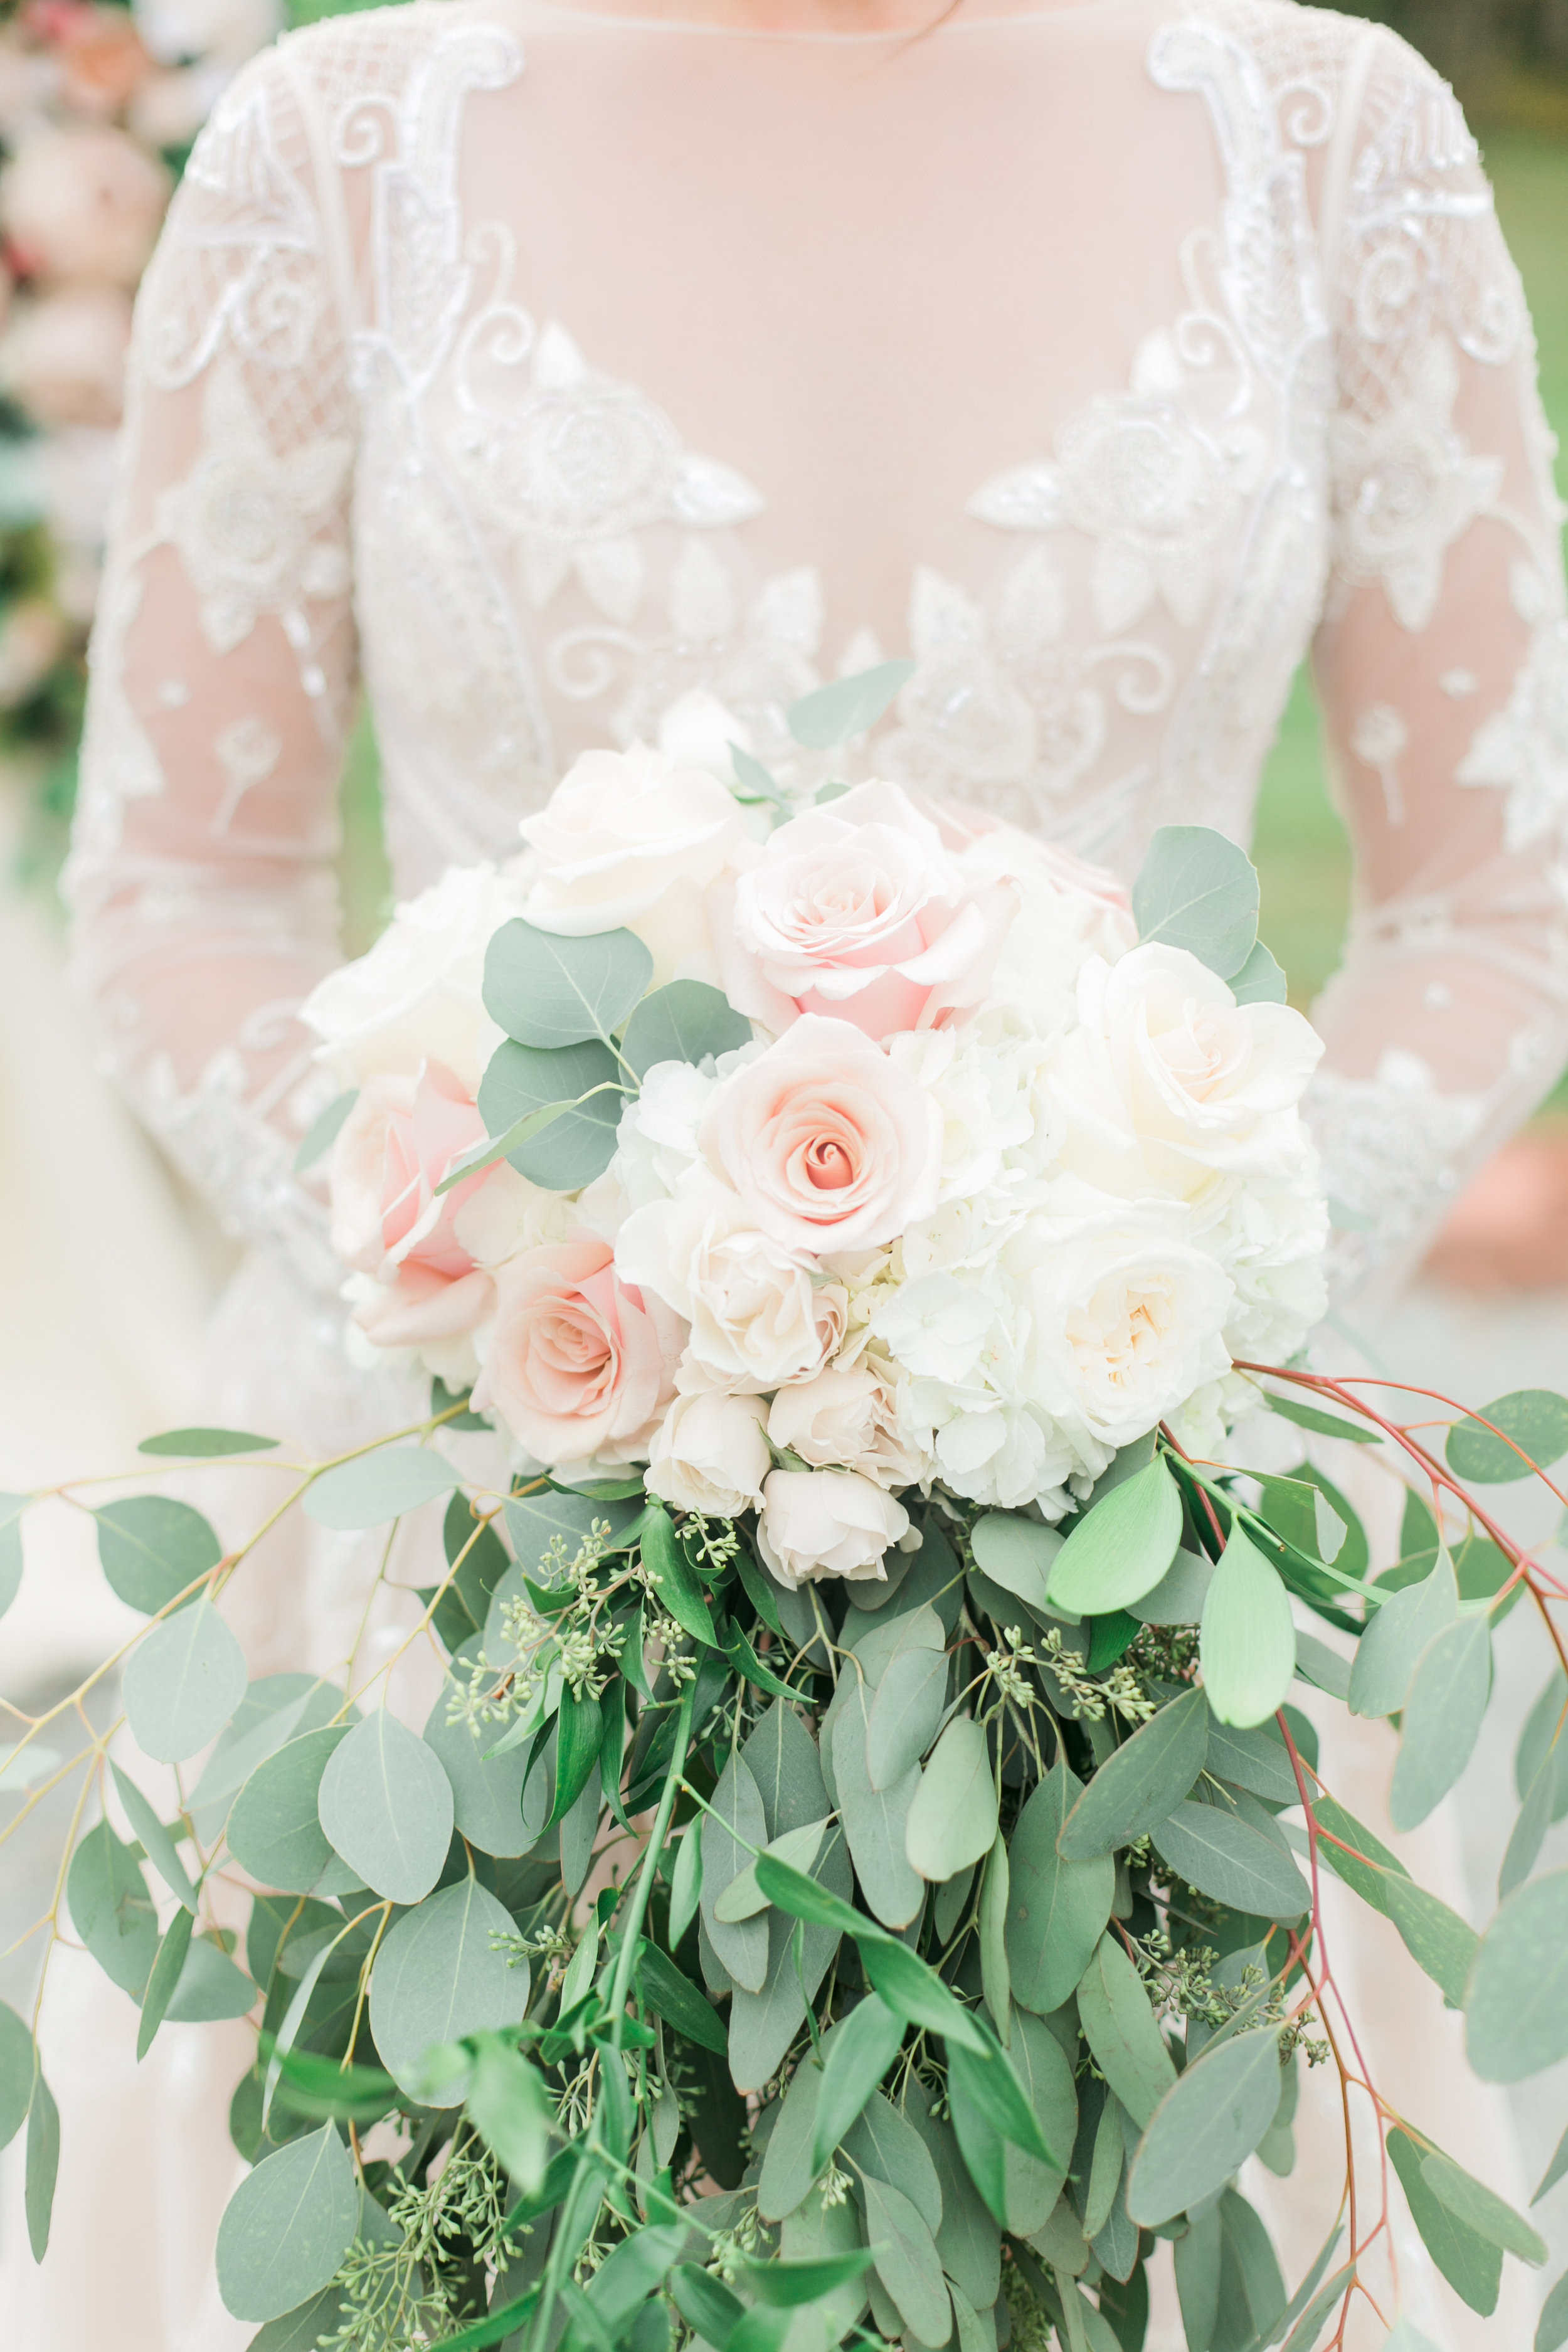 North Carolina Providence Cotton Mill Wedding — Vintage Wedding Decor Details - The Overwhelmed Bride Wedding Blog